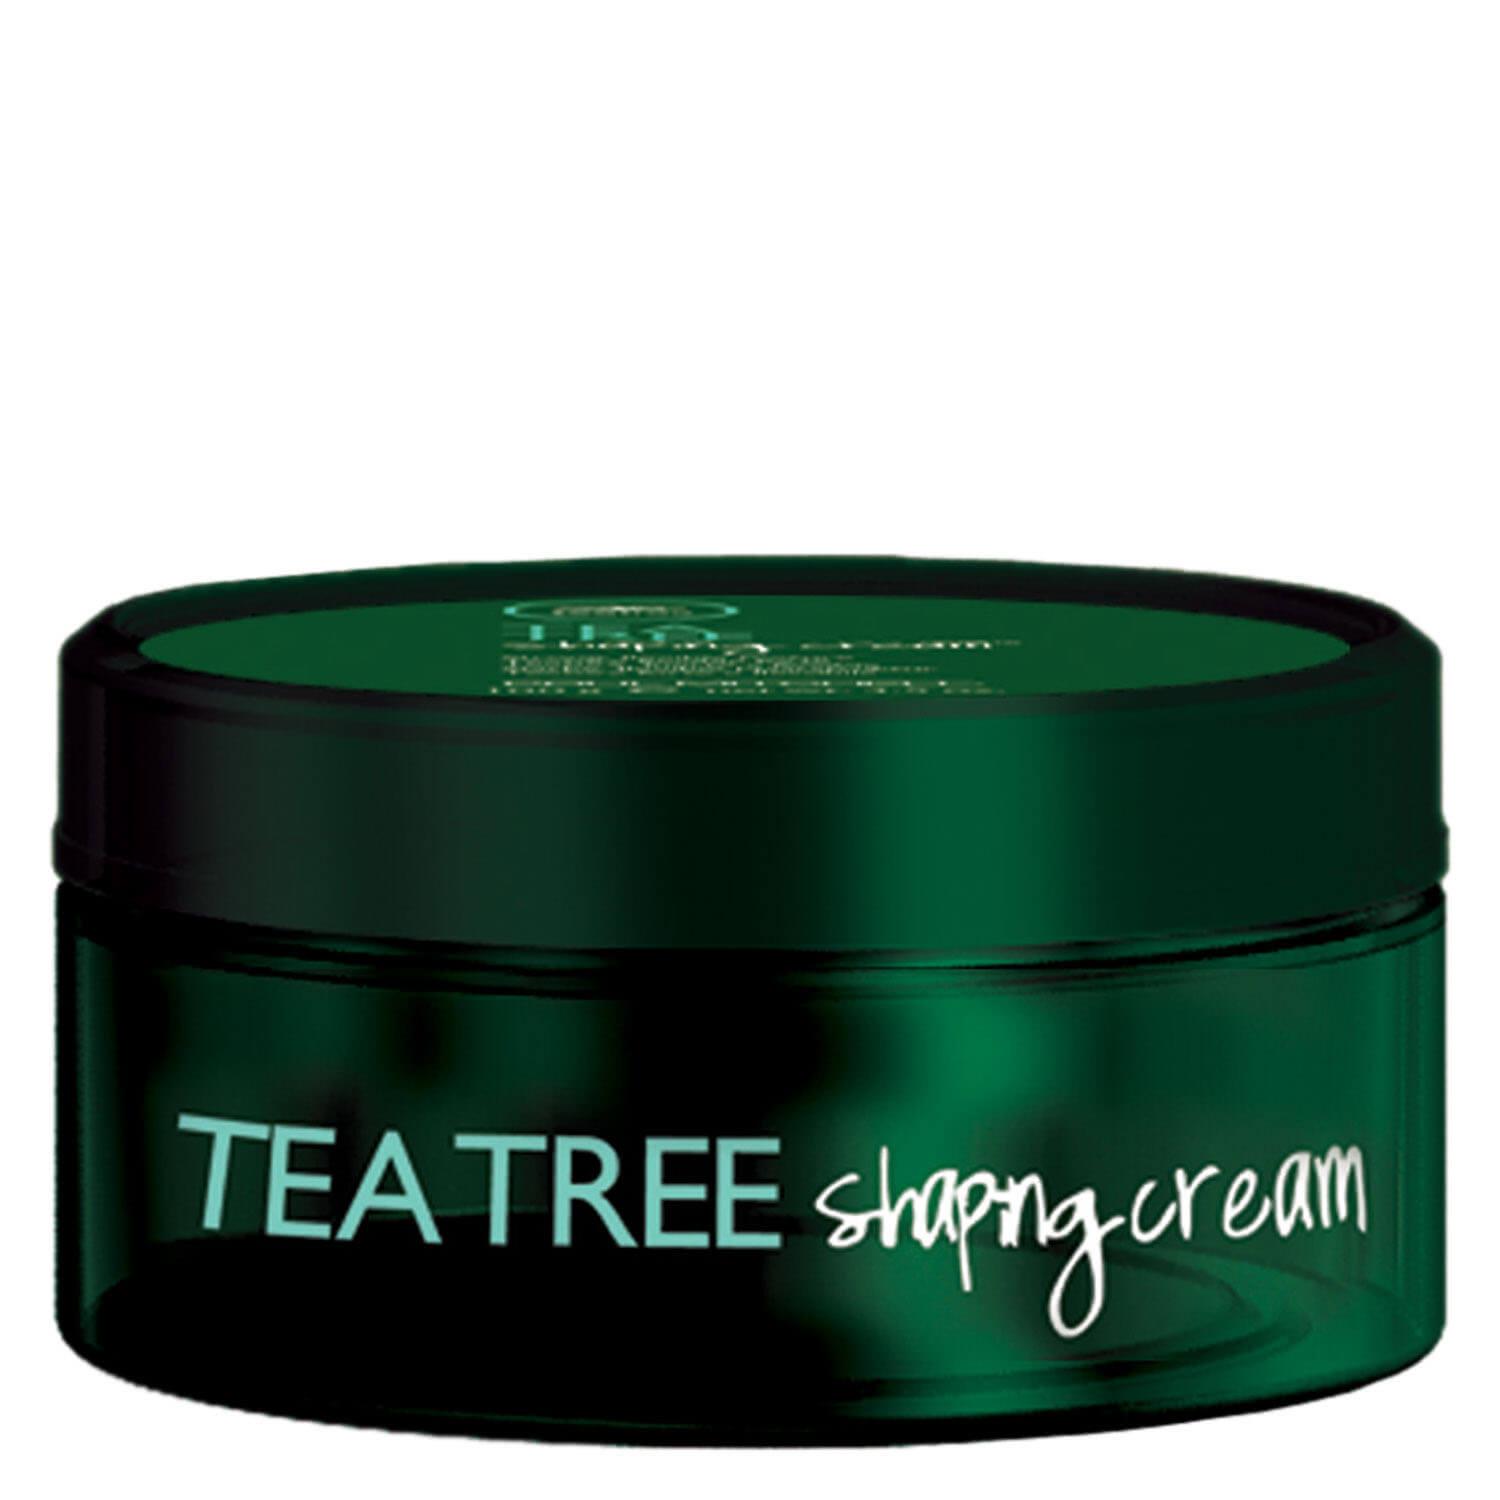 Tea Tree Special - Shaping Cream